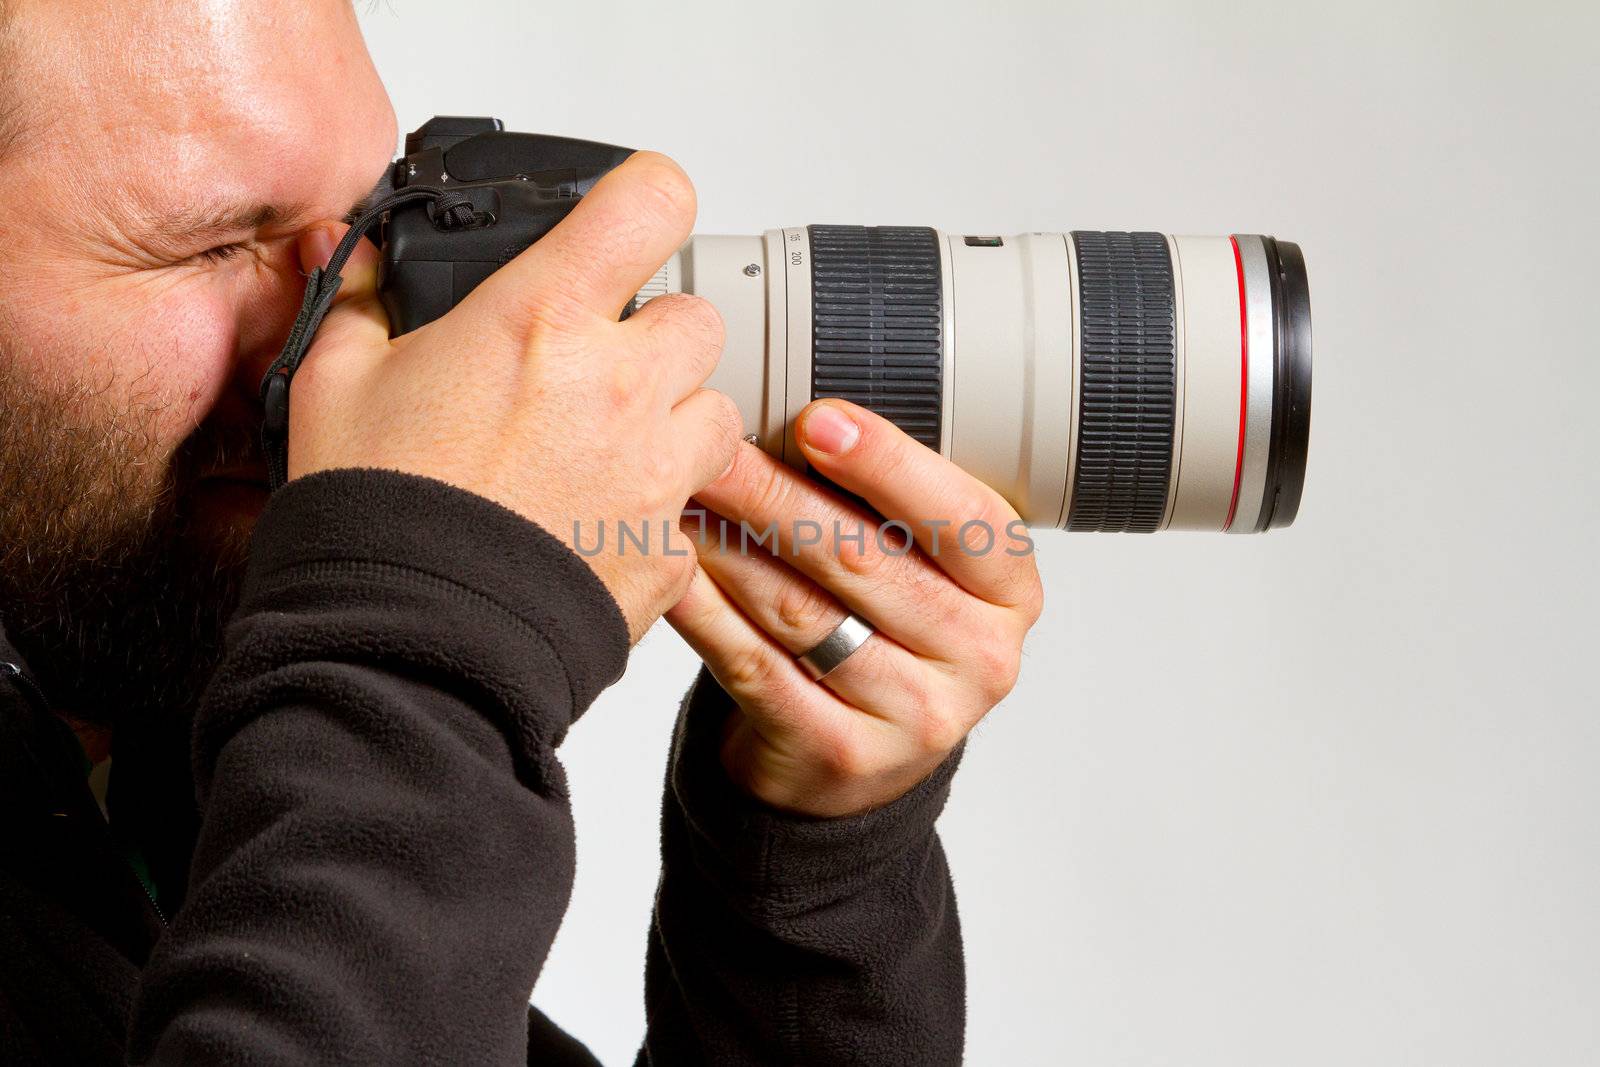 Photographer and Camera by joshuaraineyphotography